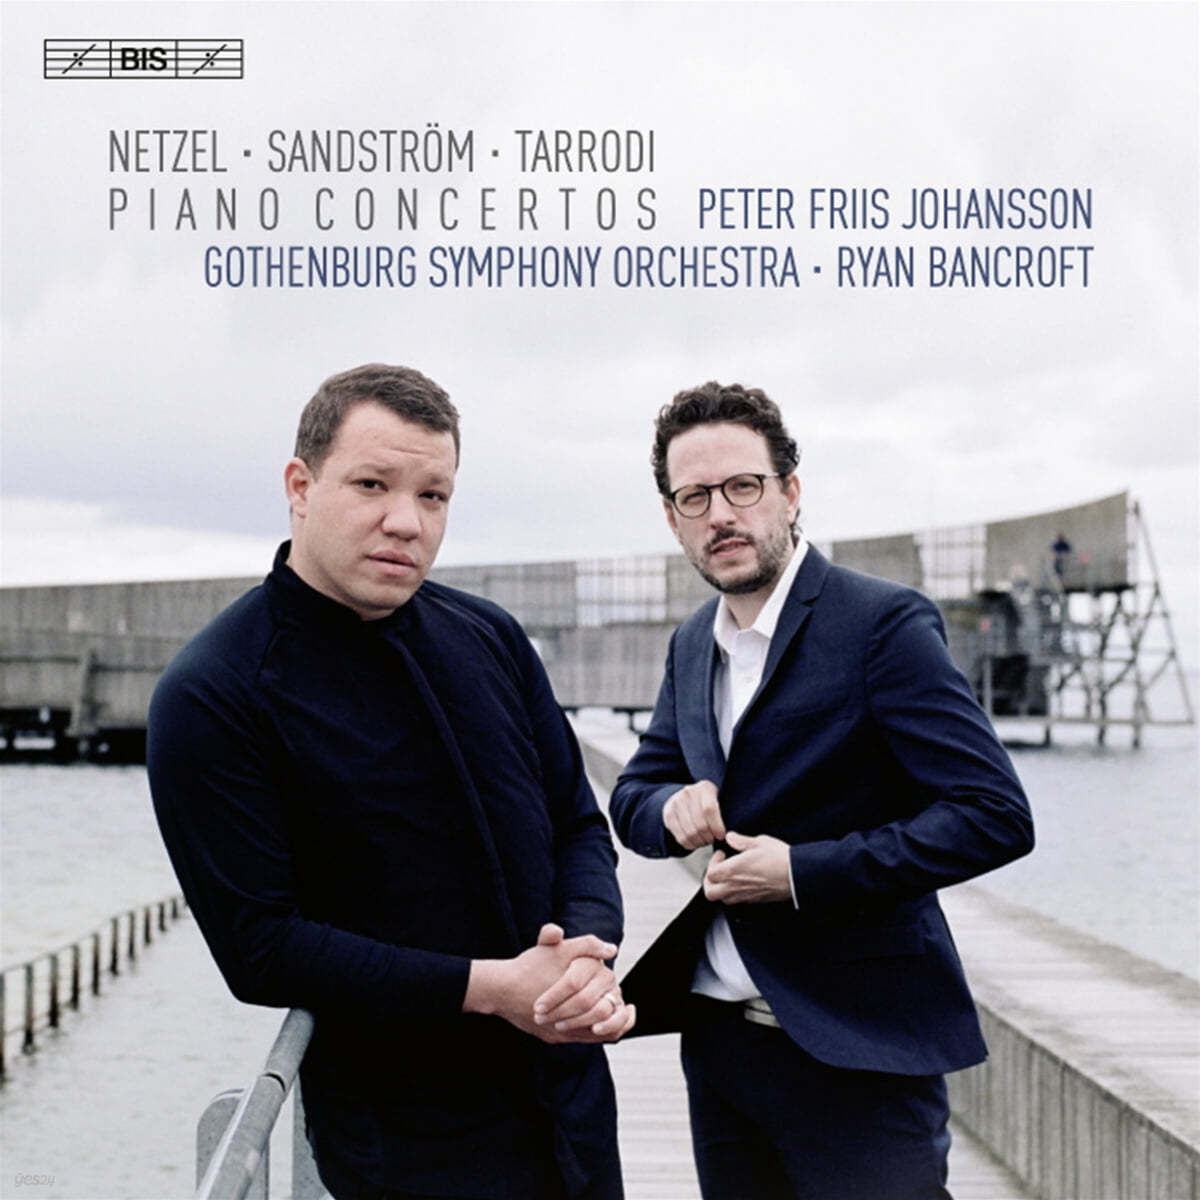 Peter Friis Johansson 넷셀 / 산드스트롬 / 타로디: 피아노 협주곡 (Netzel / Sandstrom / Tarrodi: Piano Concertos)